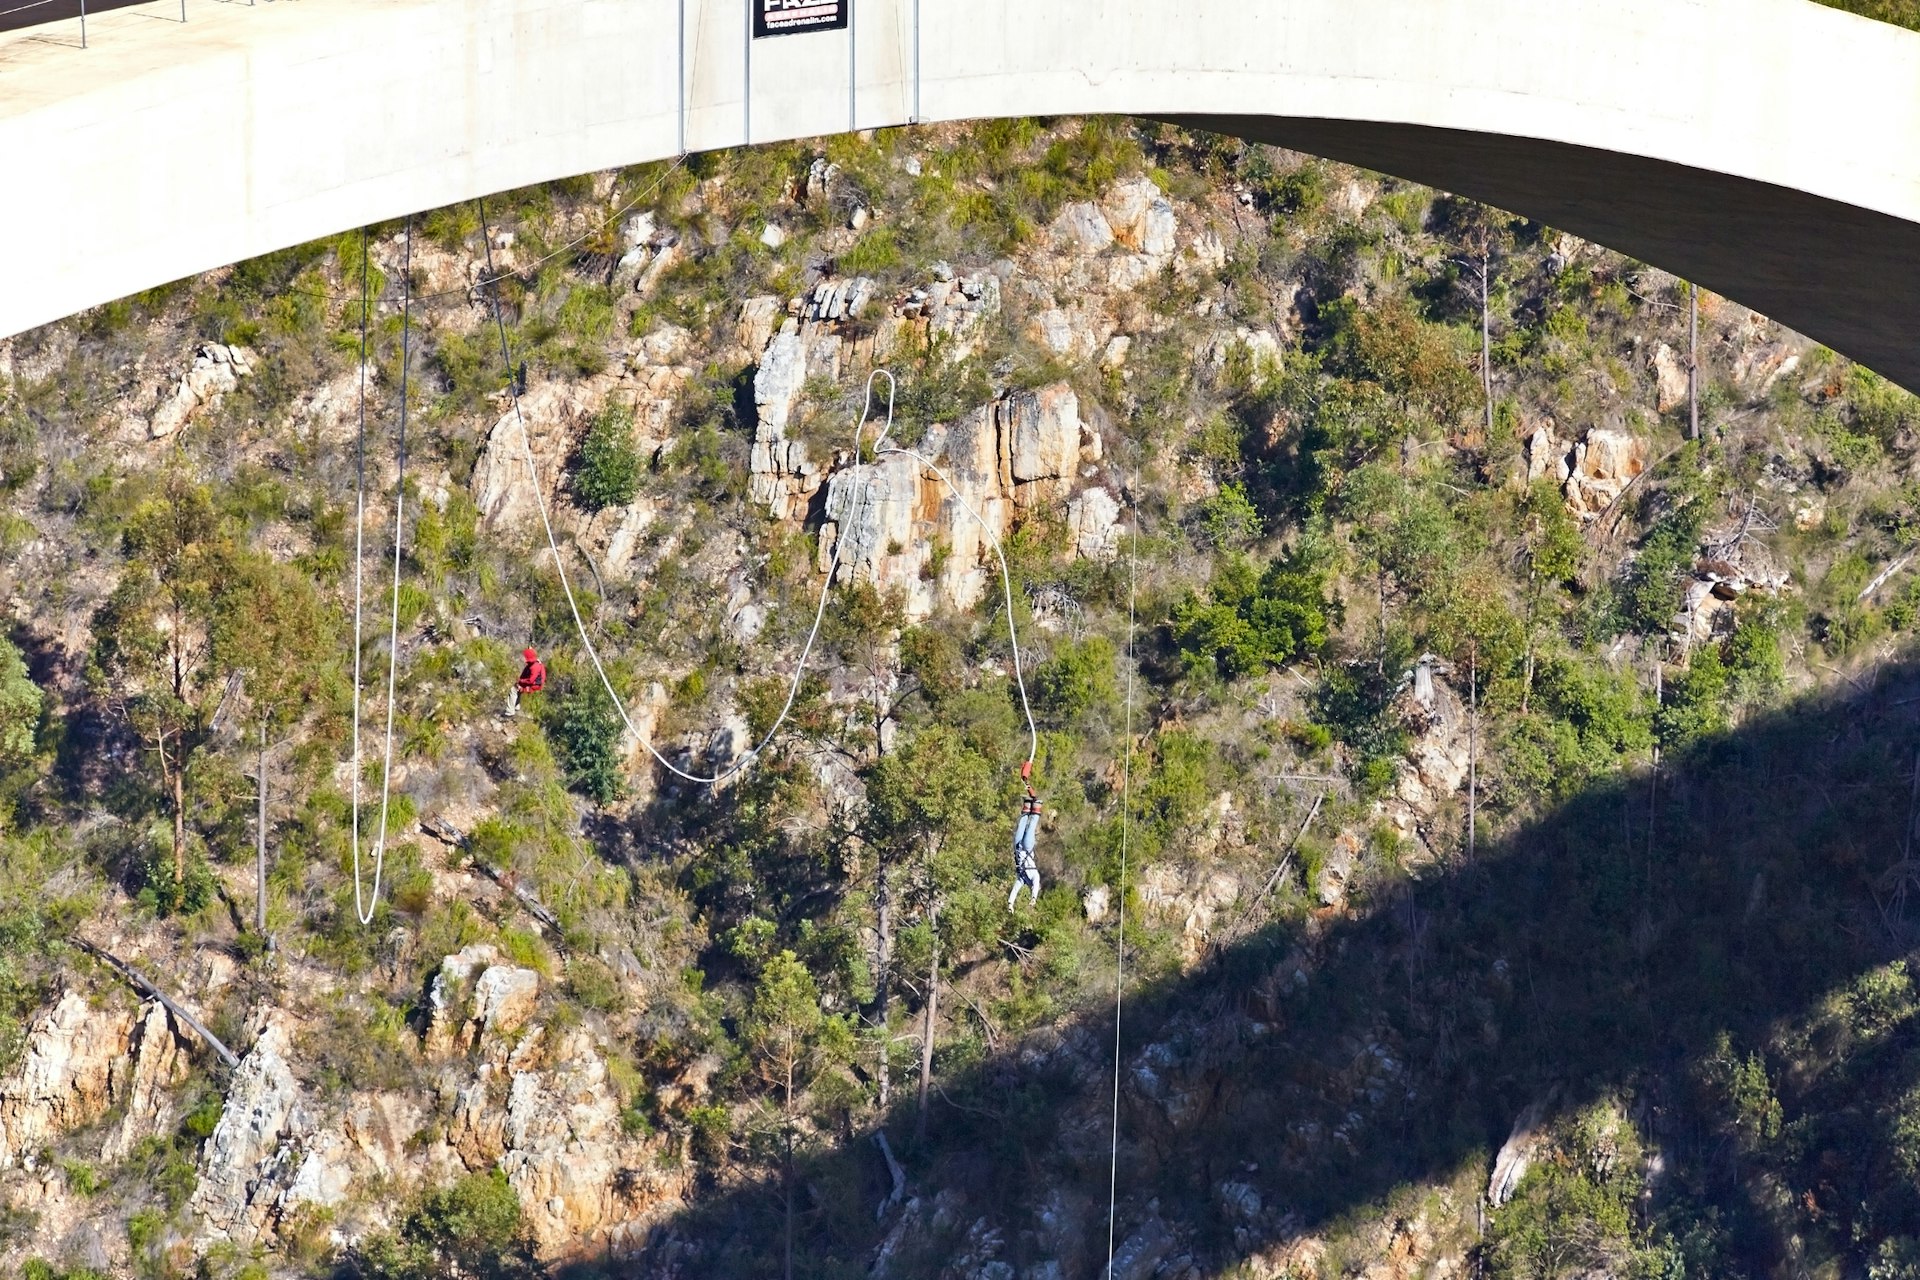 Adventurous people bungee jumping off the Bloukrans Bridge in South Africa